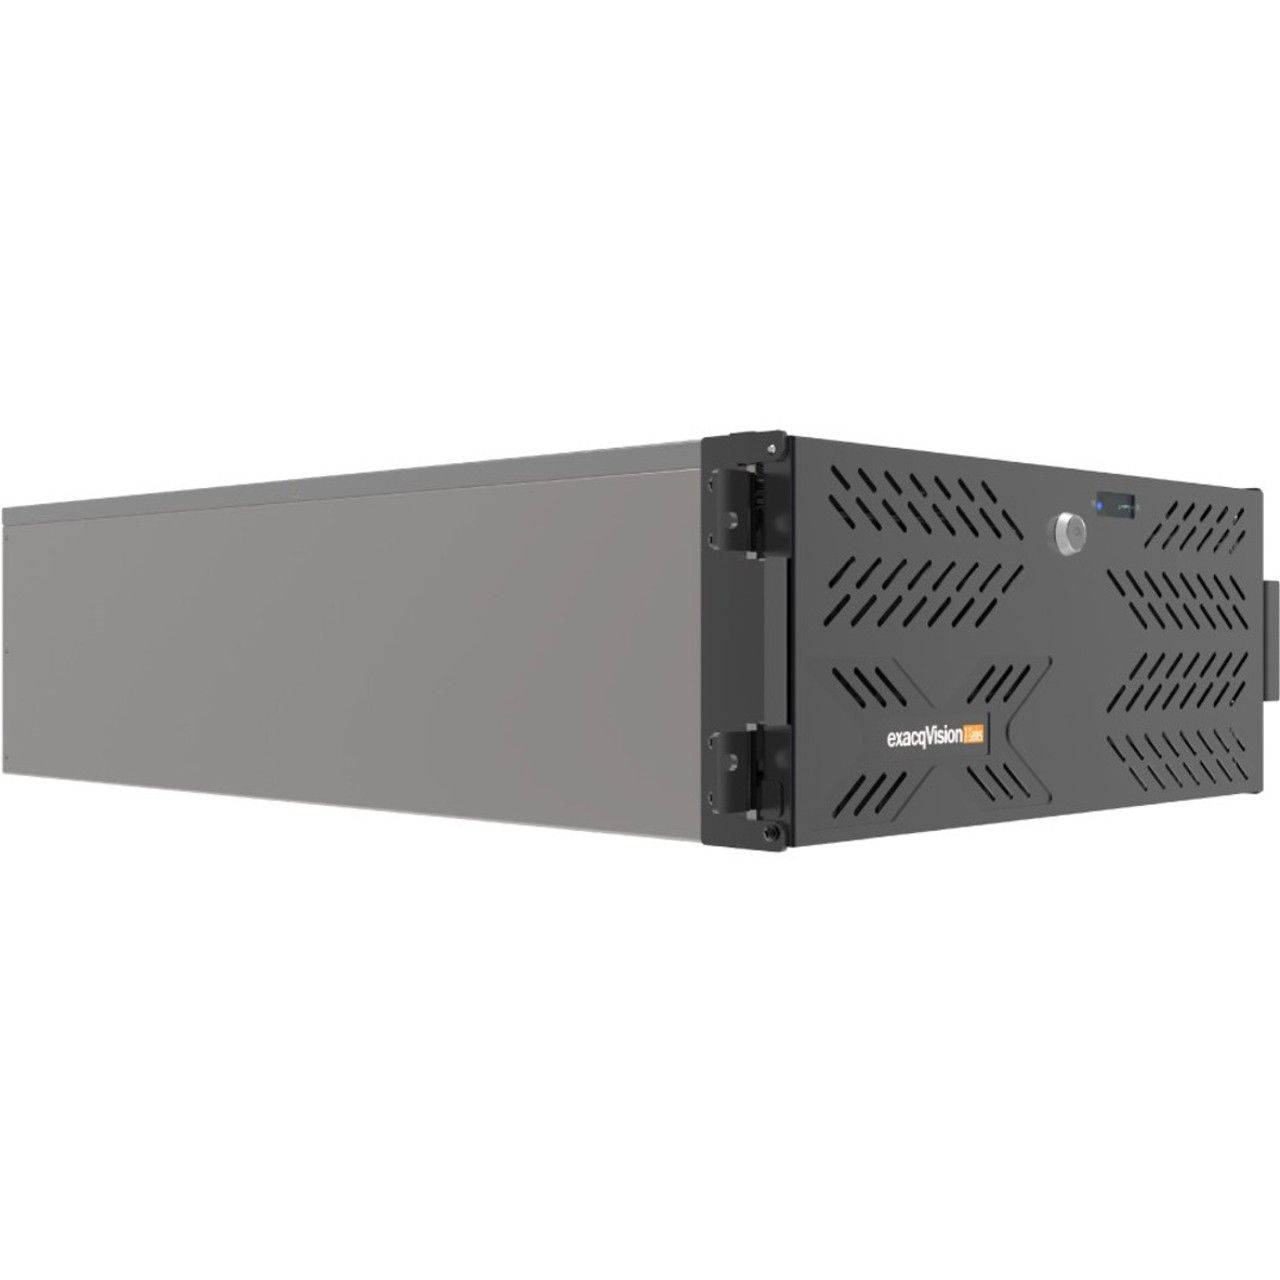 Exacq exacqVision Z Hybrid Server - 42 TB HDD - 6408-54T-R4ZL